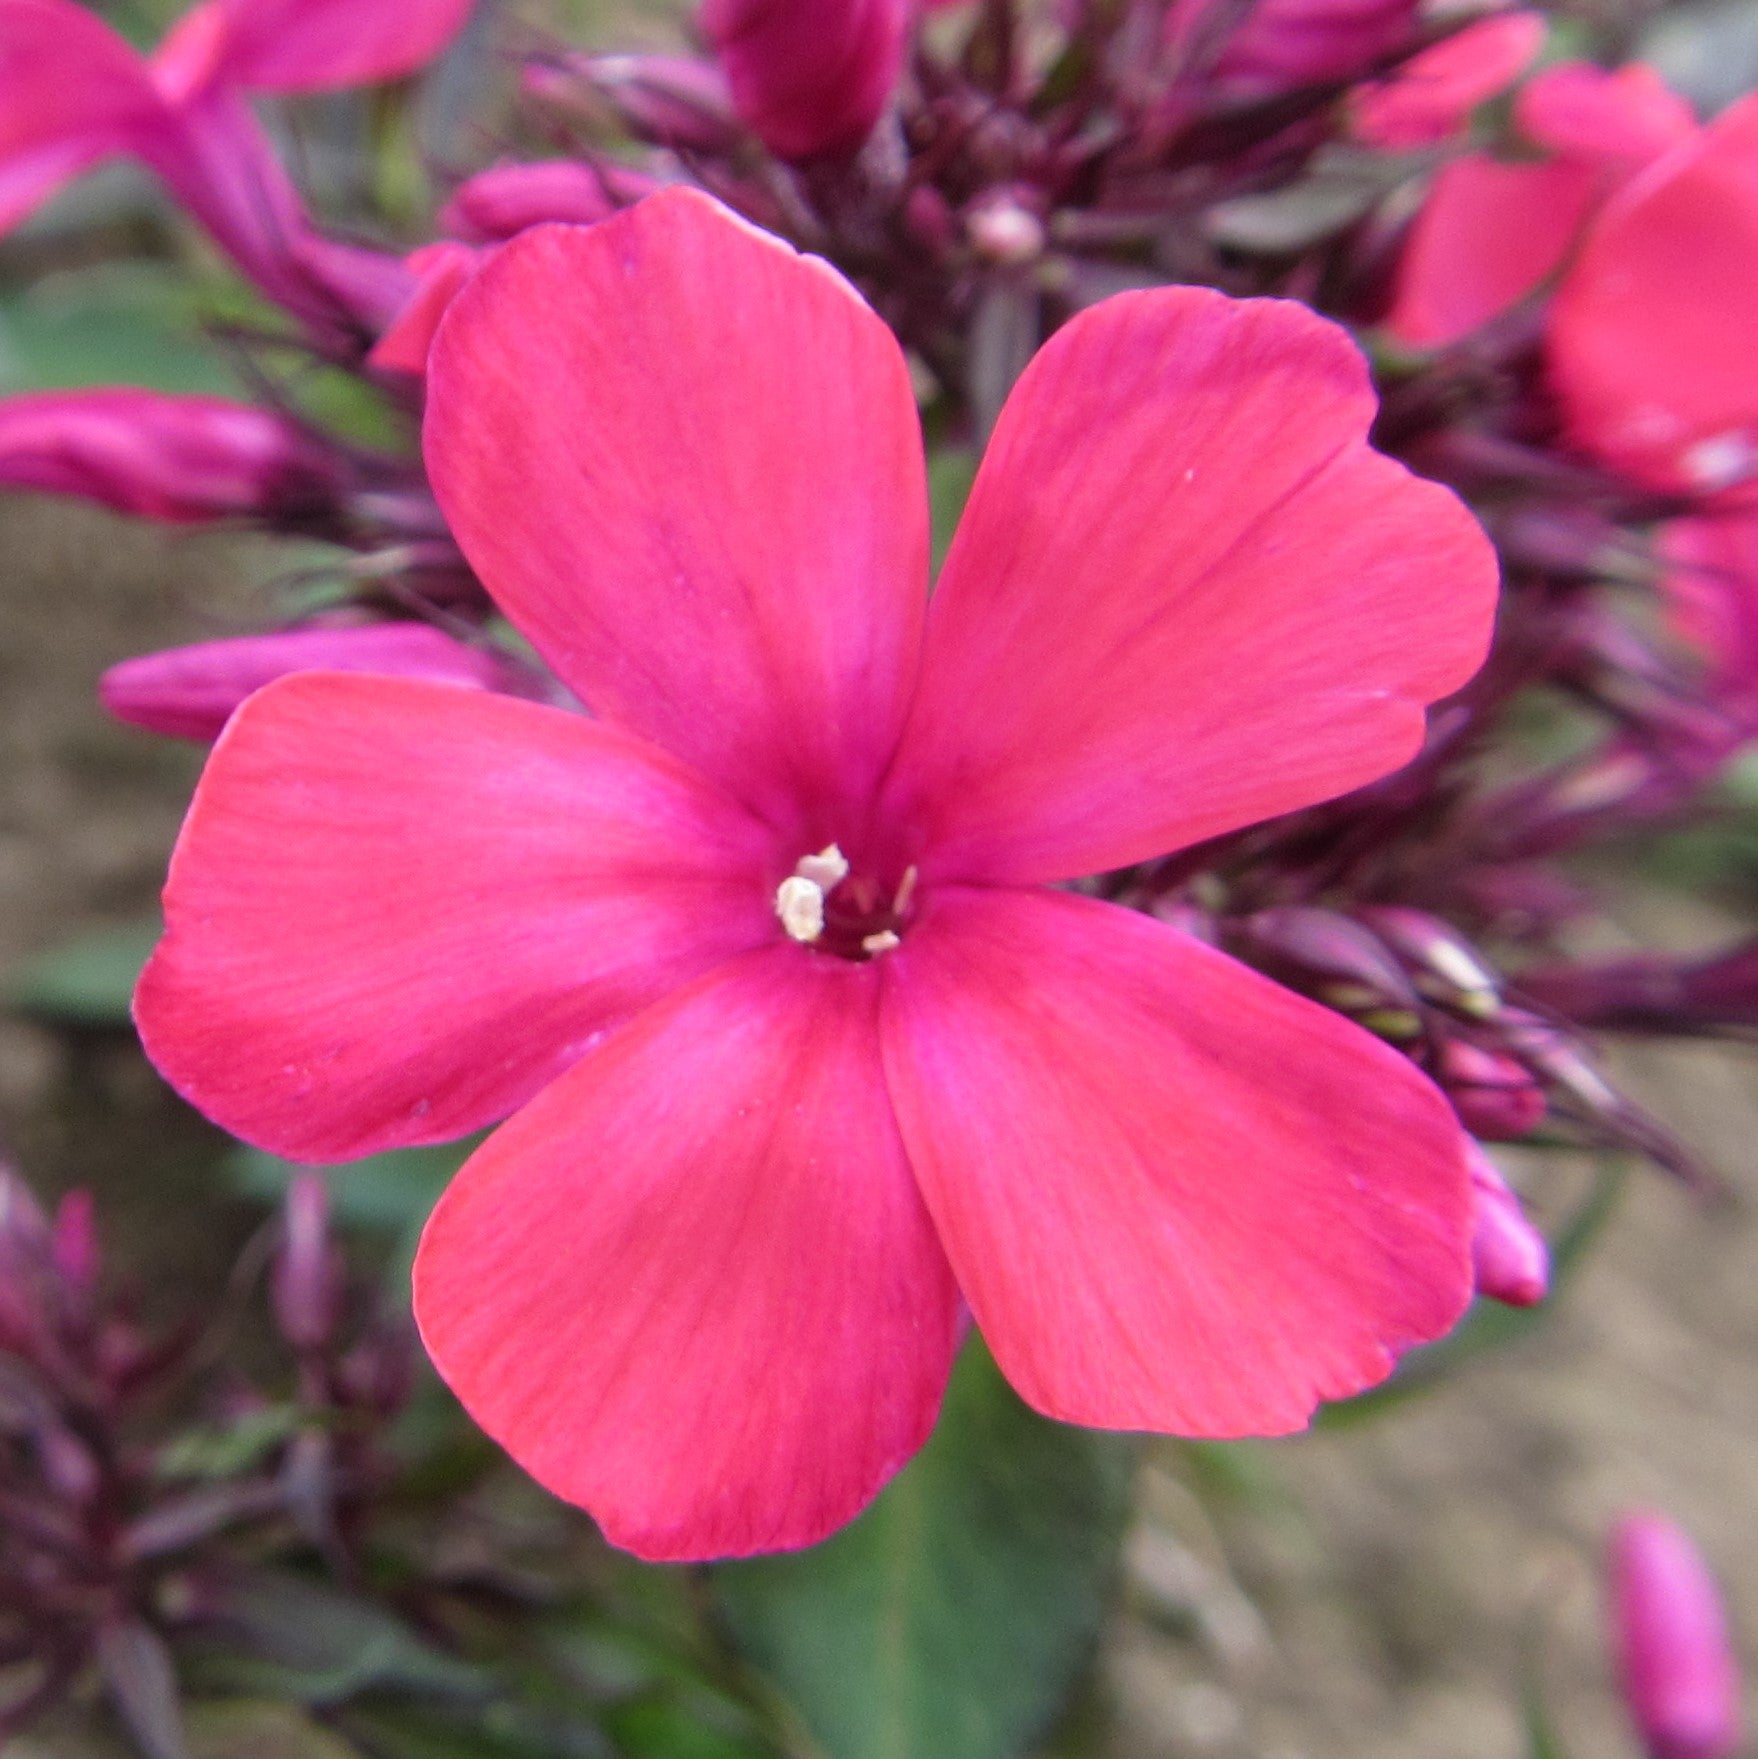 Bright Beautiful "Starfire" Phlox Flower